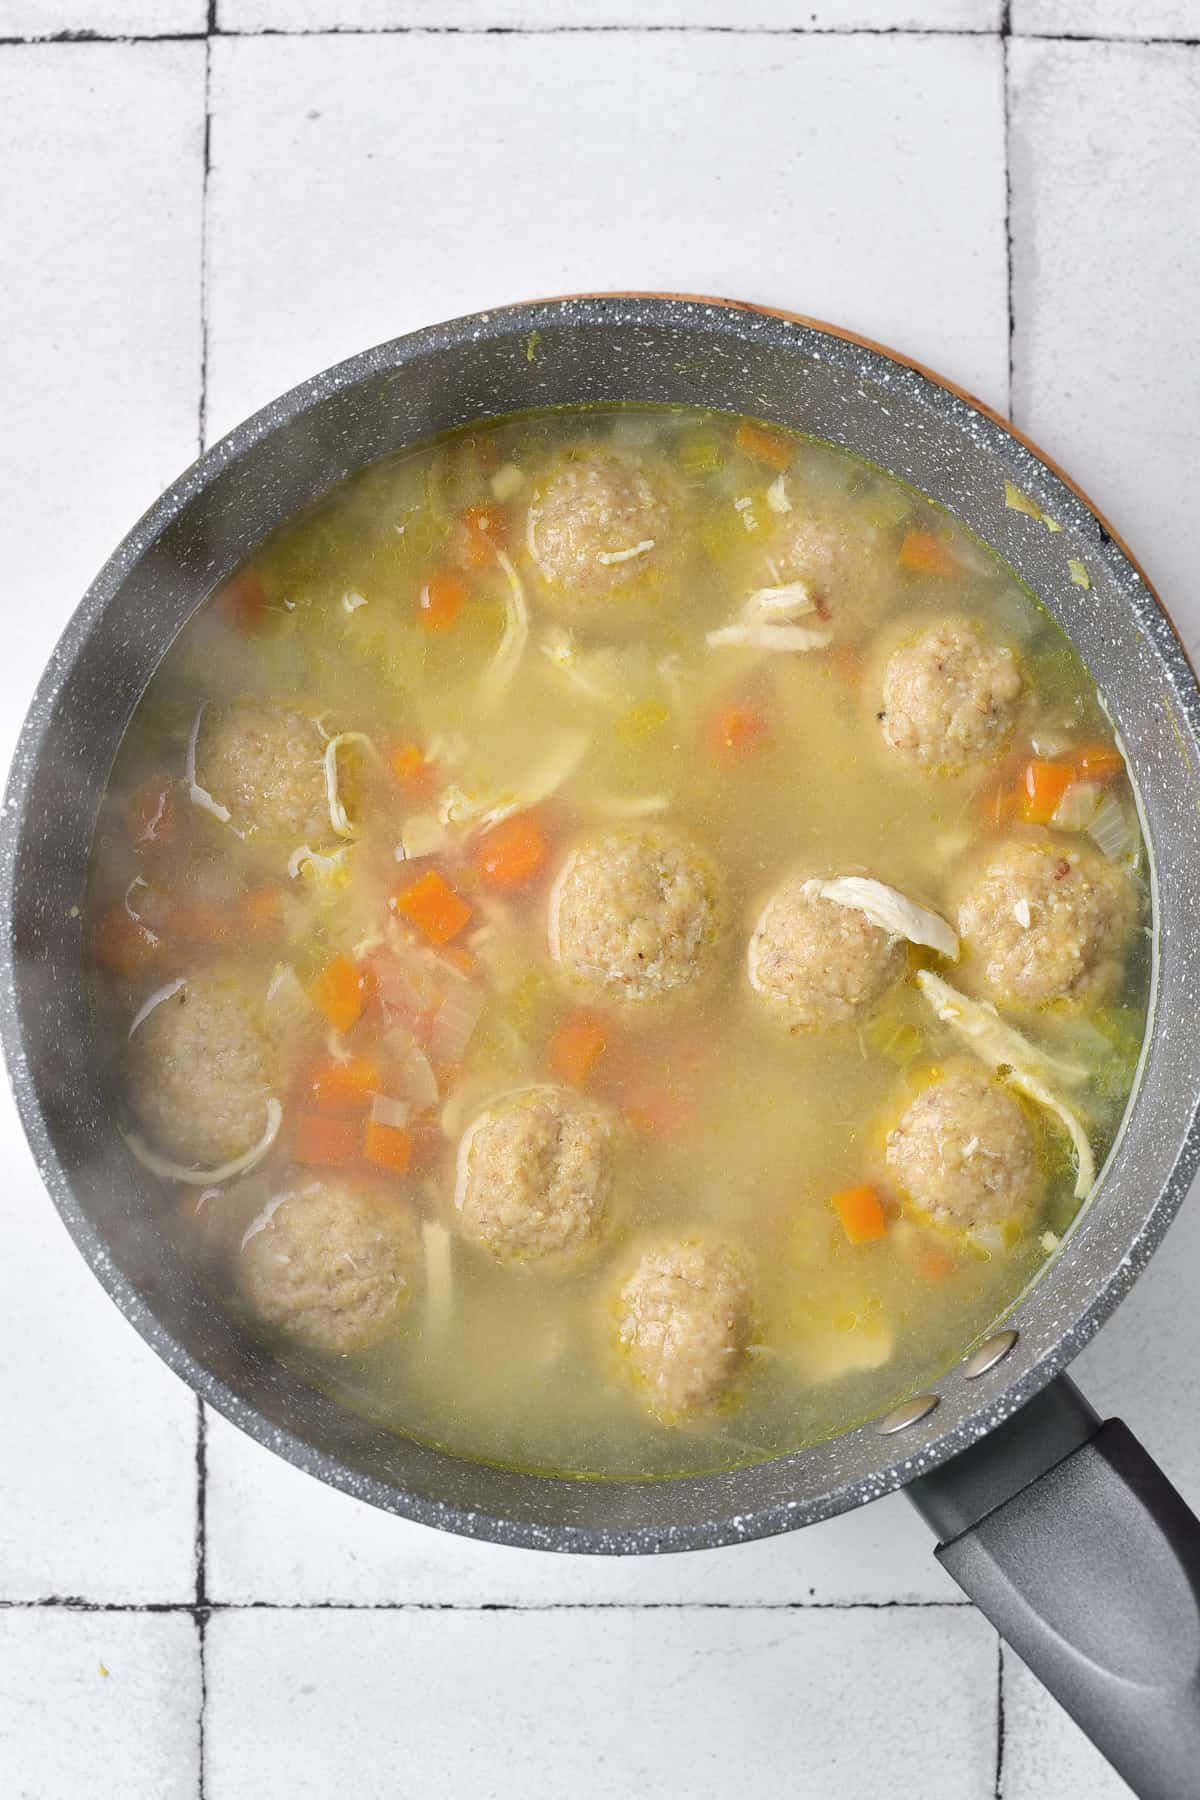 Matzo balls in the chicken soup.